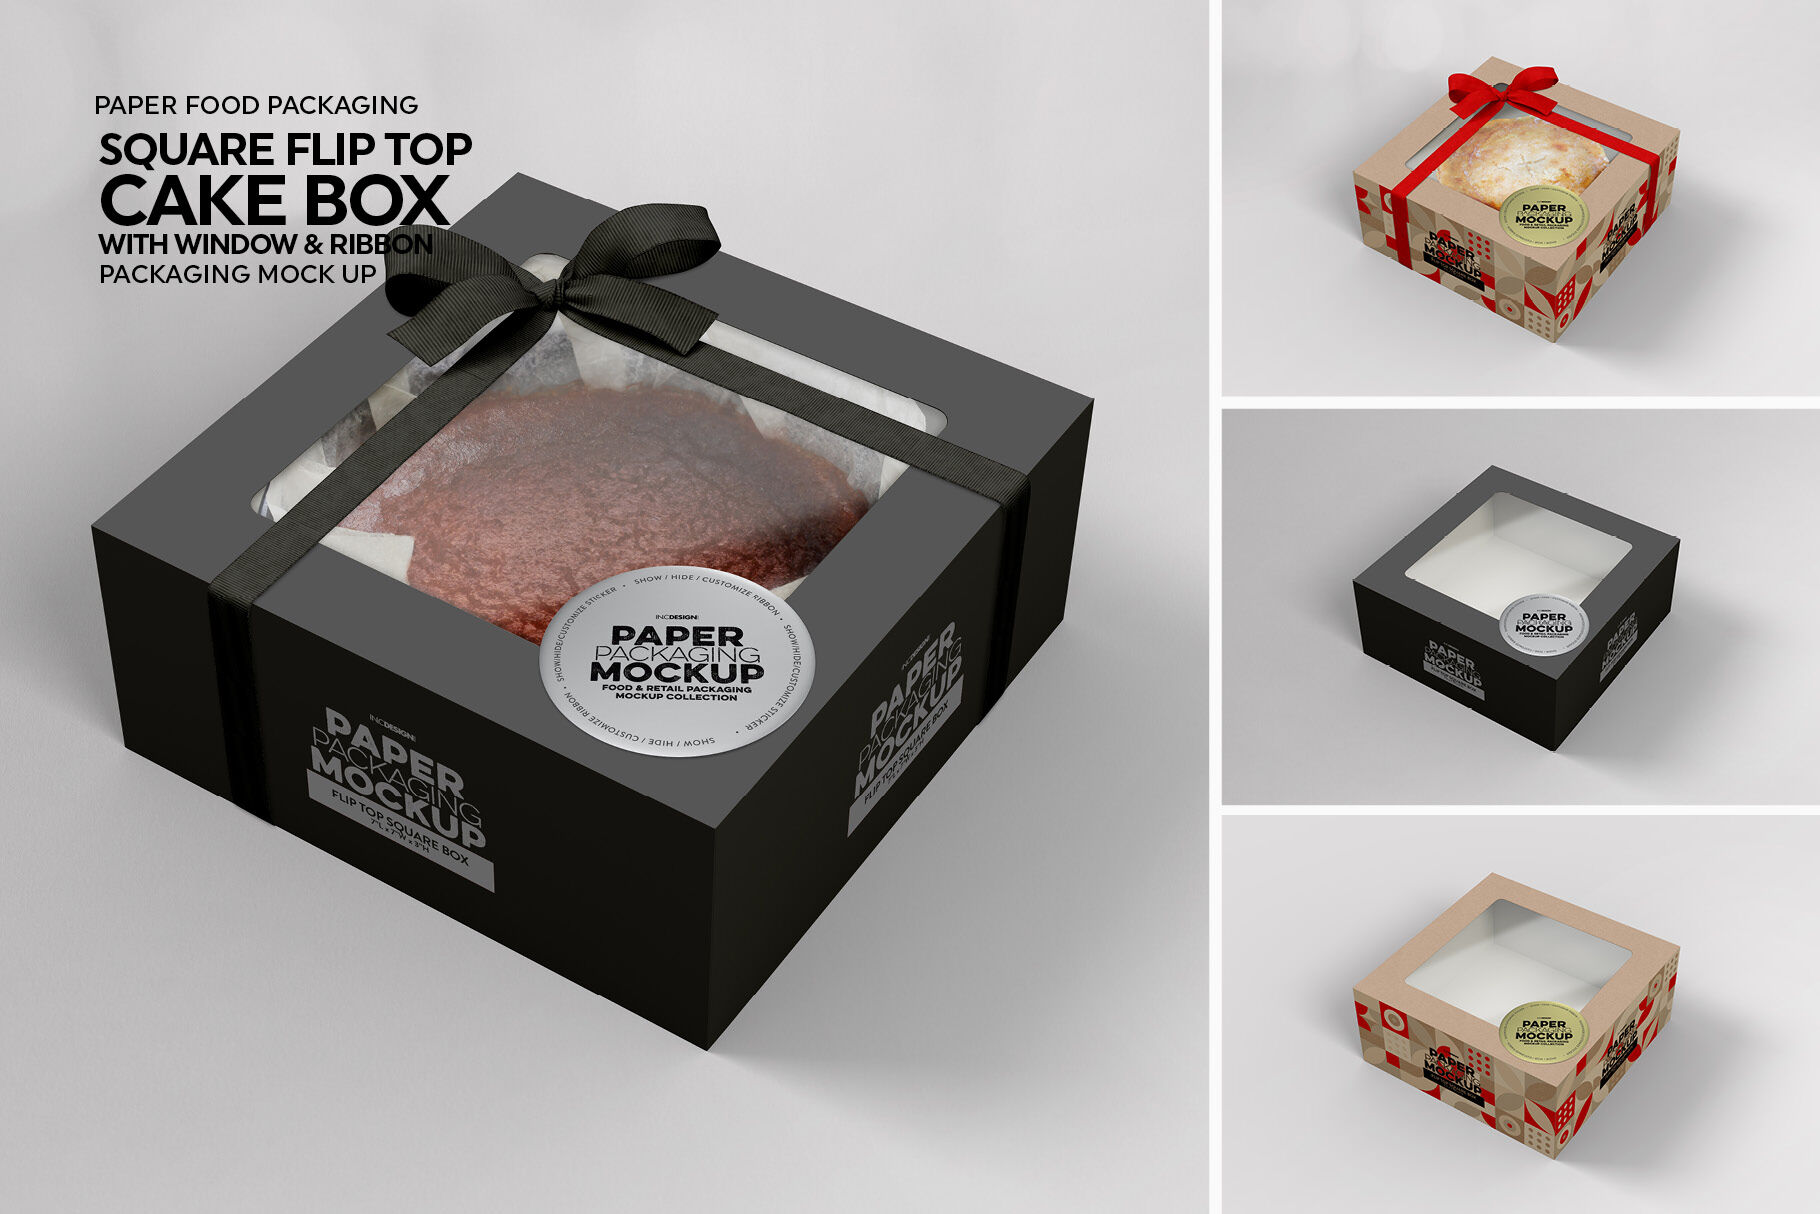 Download Square Flip Top Cake Box Packaging Mockup By Inc Design Studio Thehungryjpeg Com